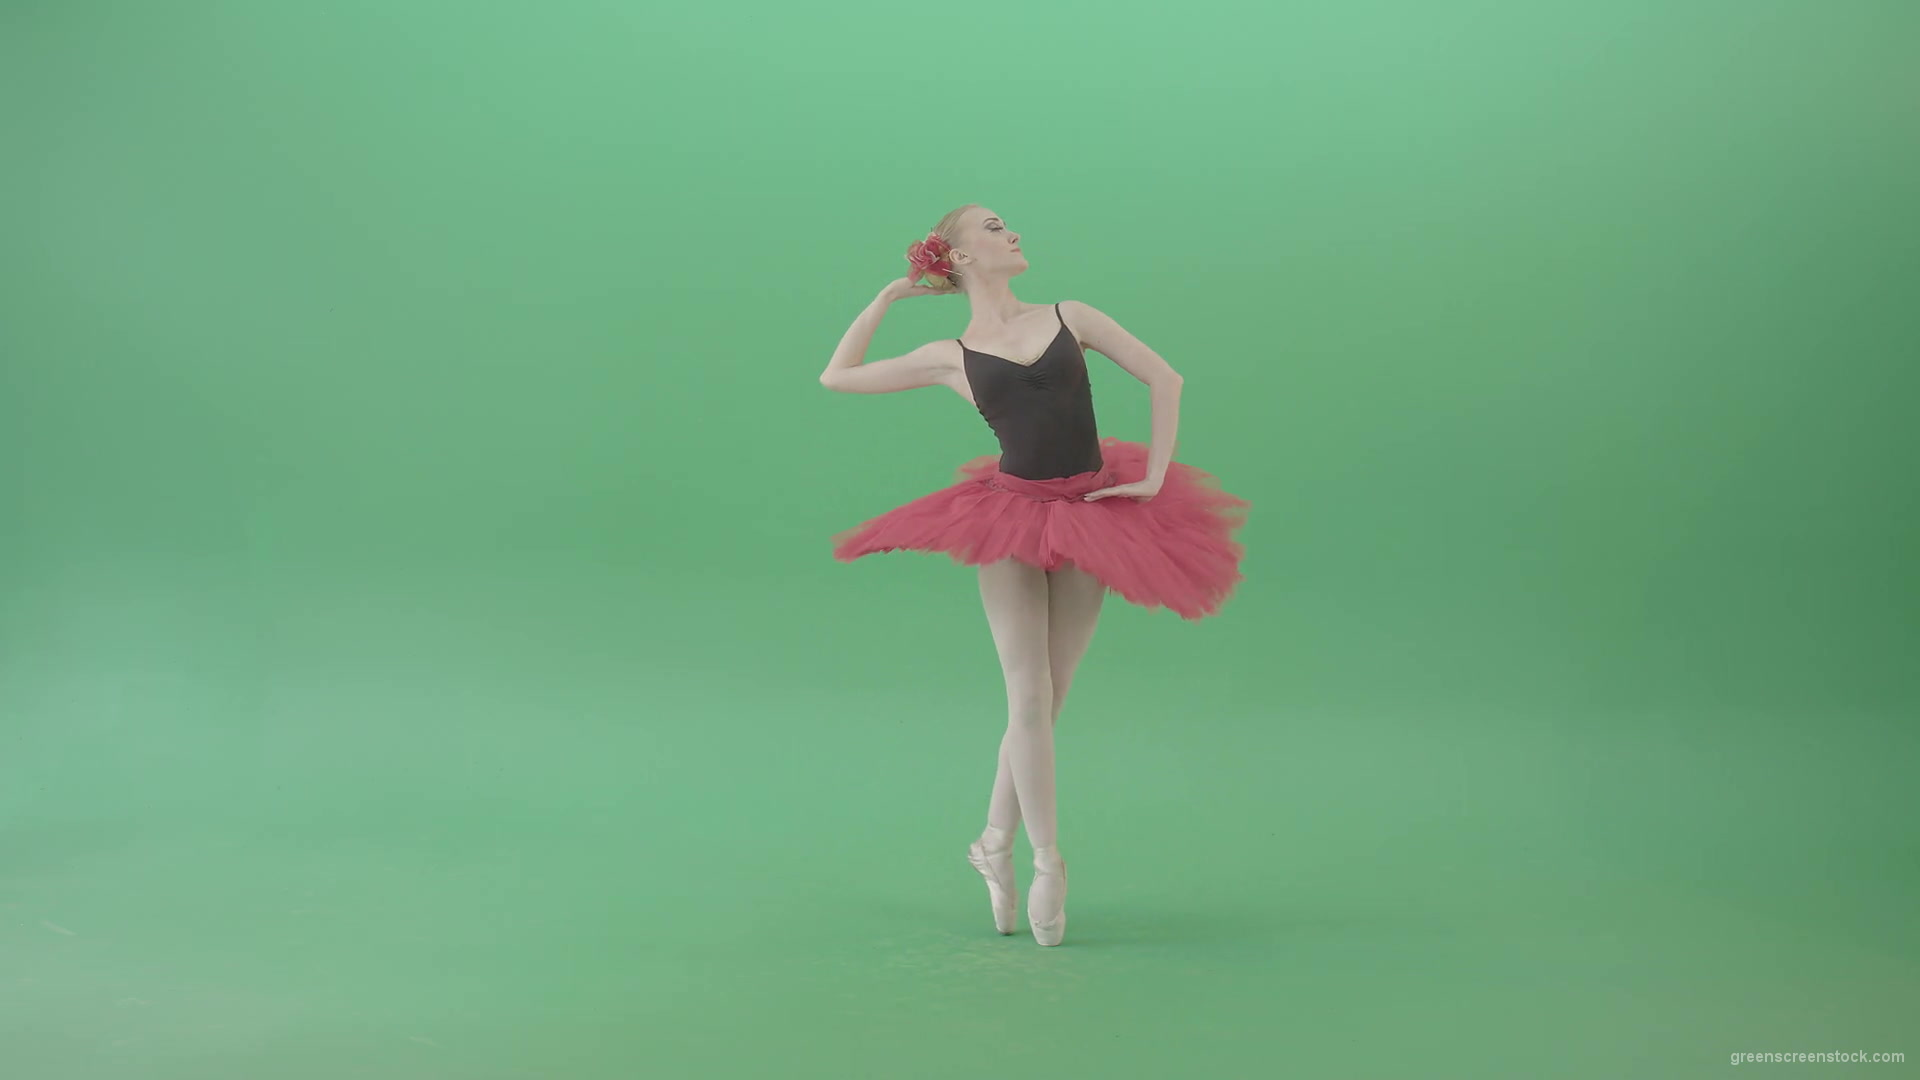 Happy-smiling-ballet-girl-ballerina-spinning-in-dance-on-green-screen-4K-Video-Footage-1920_009 Green Screen Stock